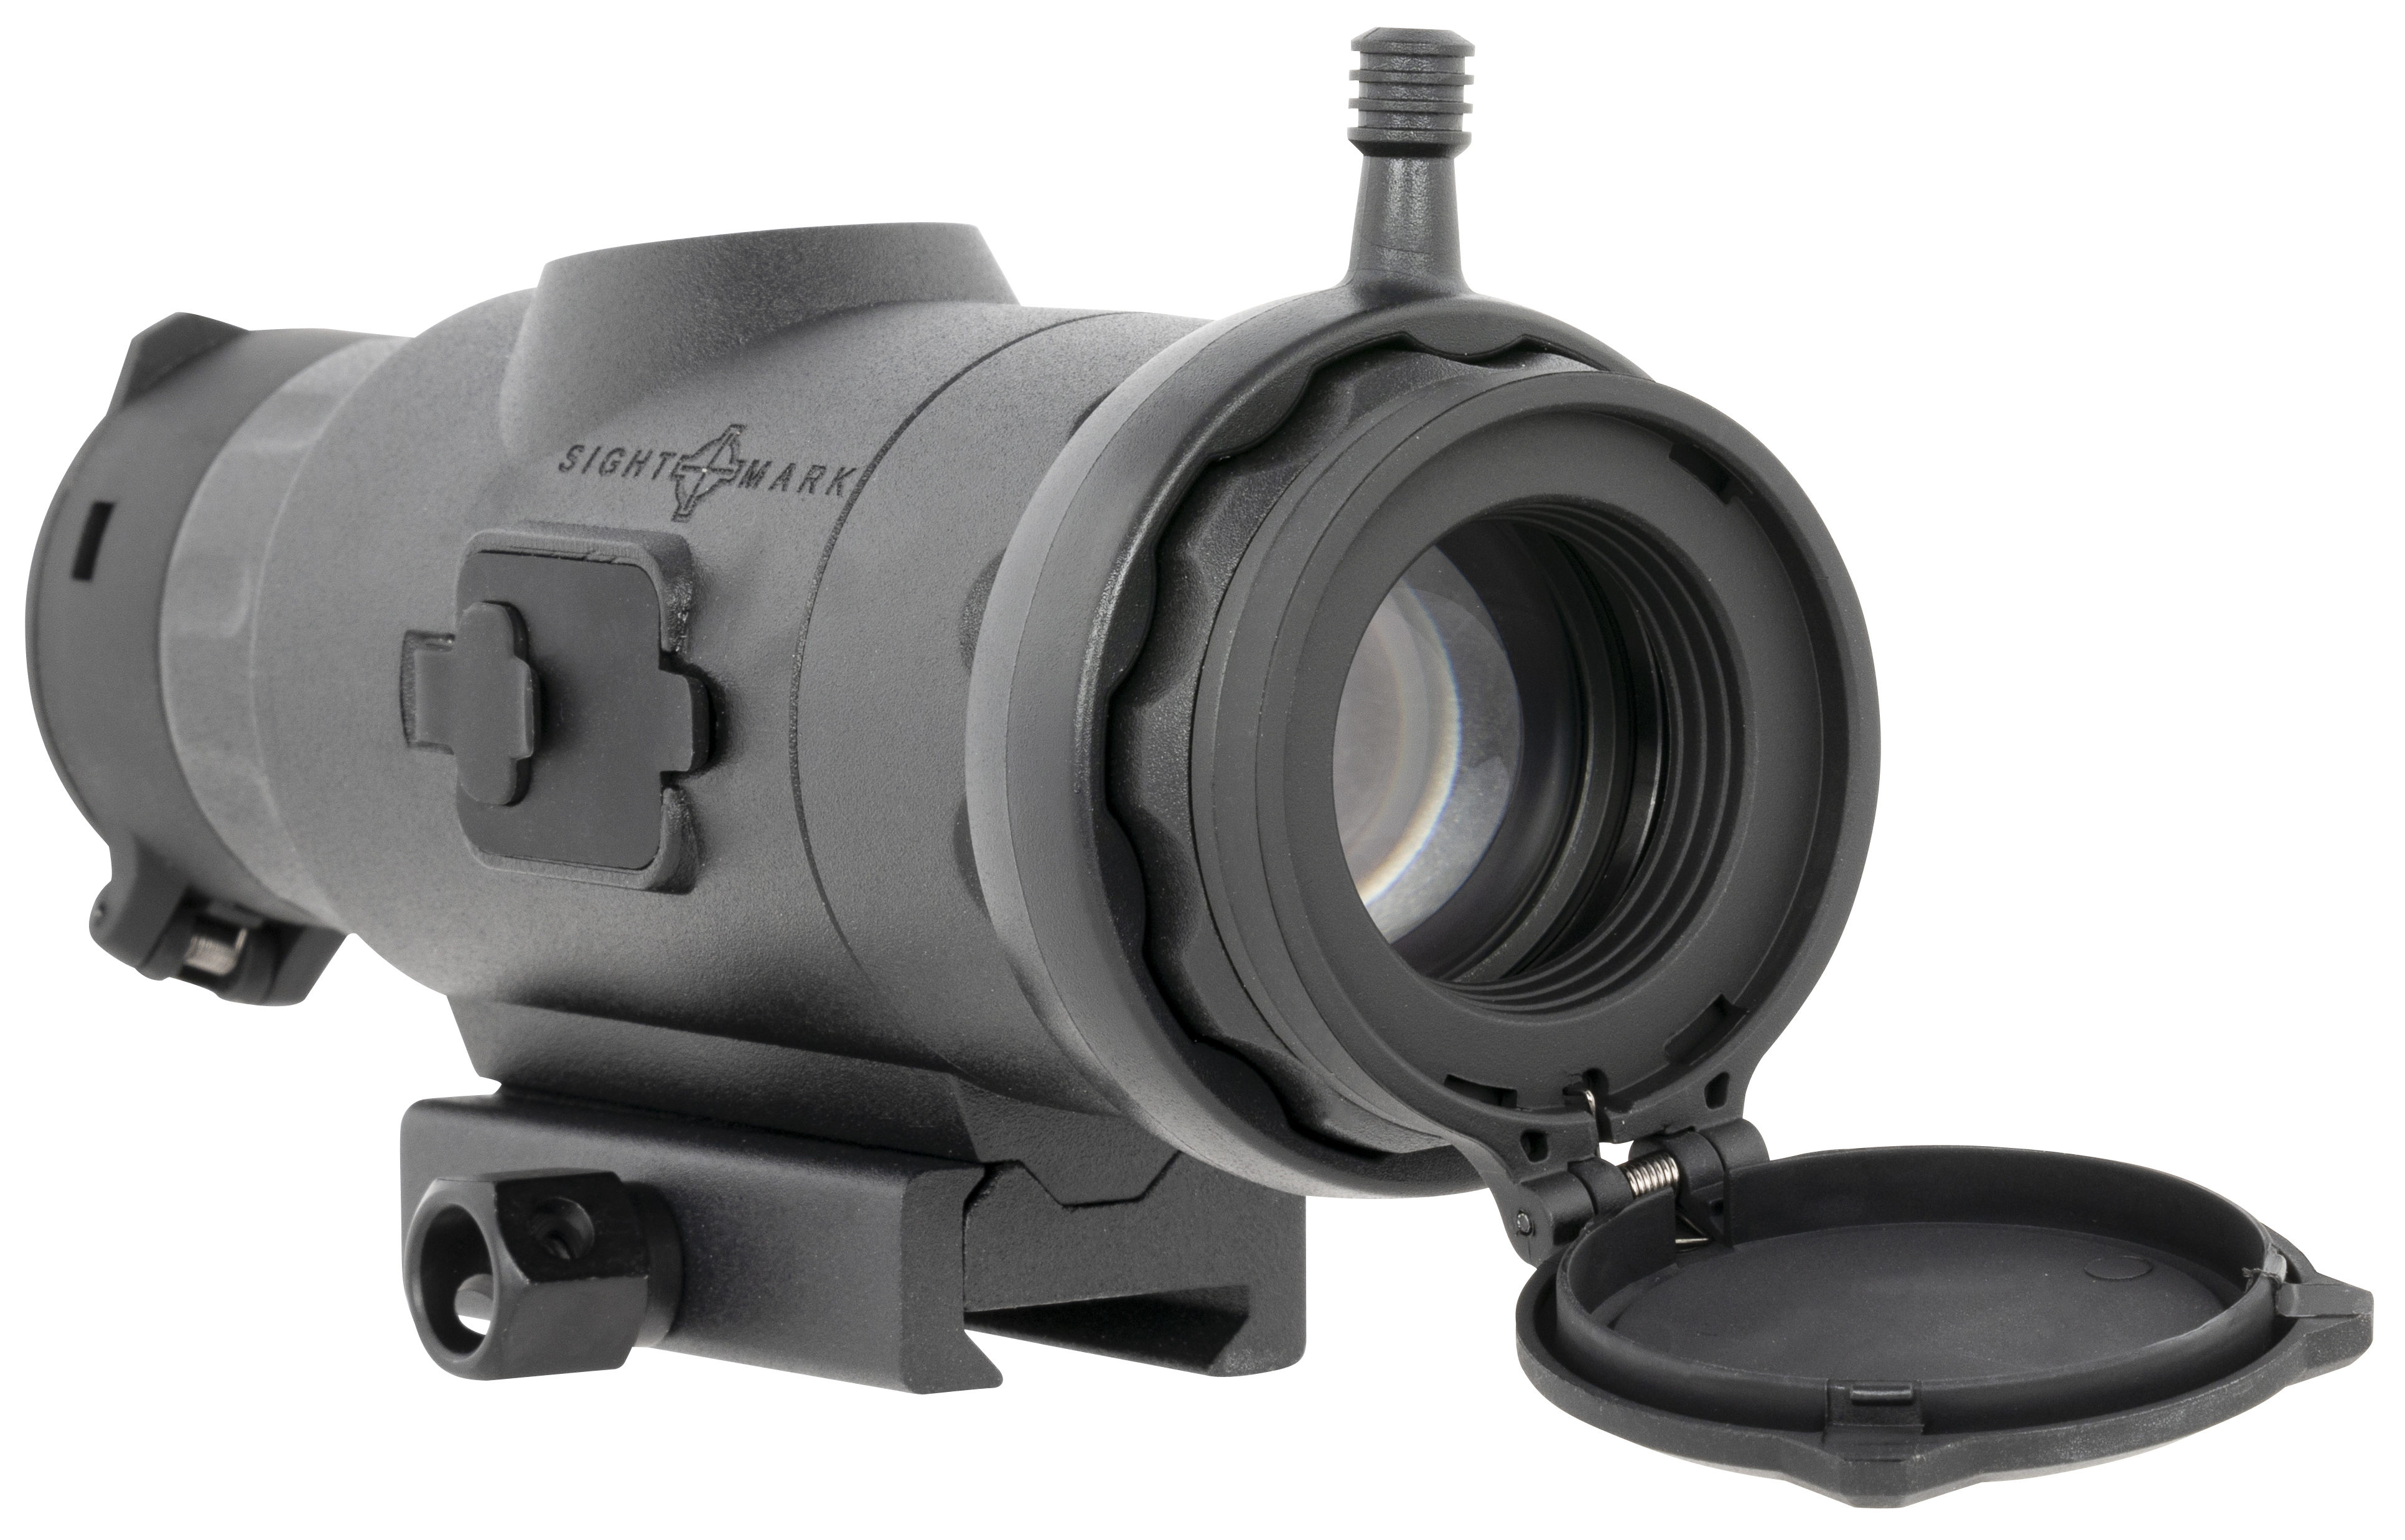 Sightmark Wraith 4K Mini Night Vision Riflescope